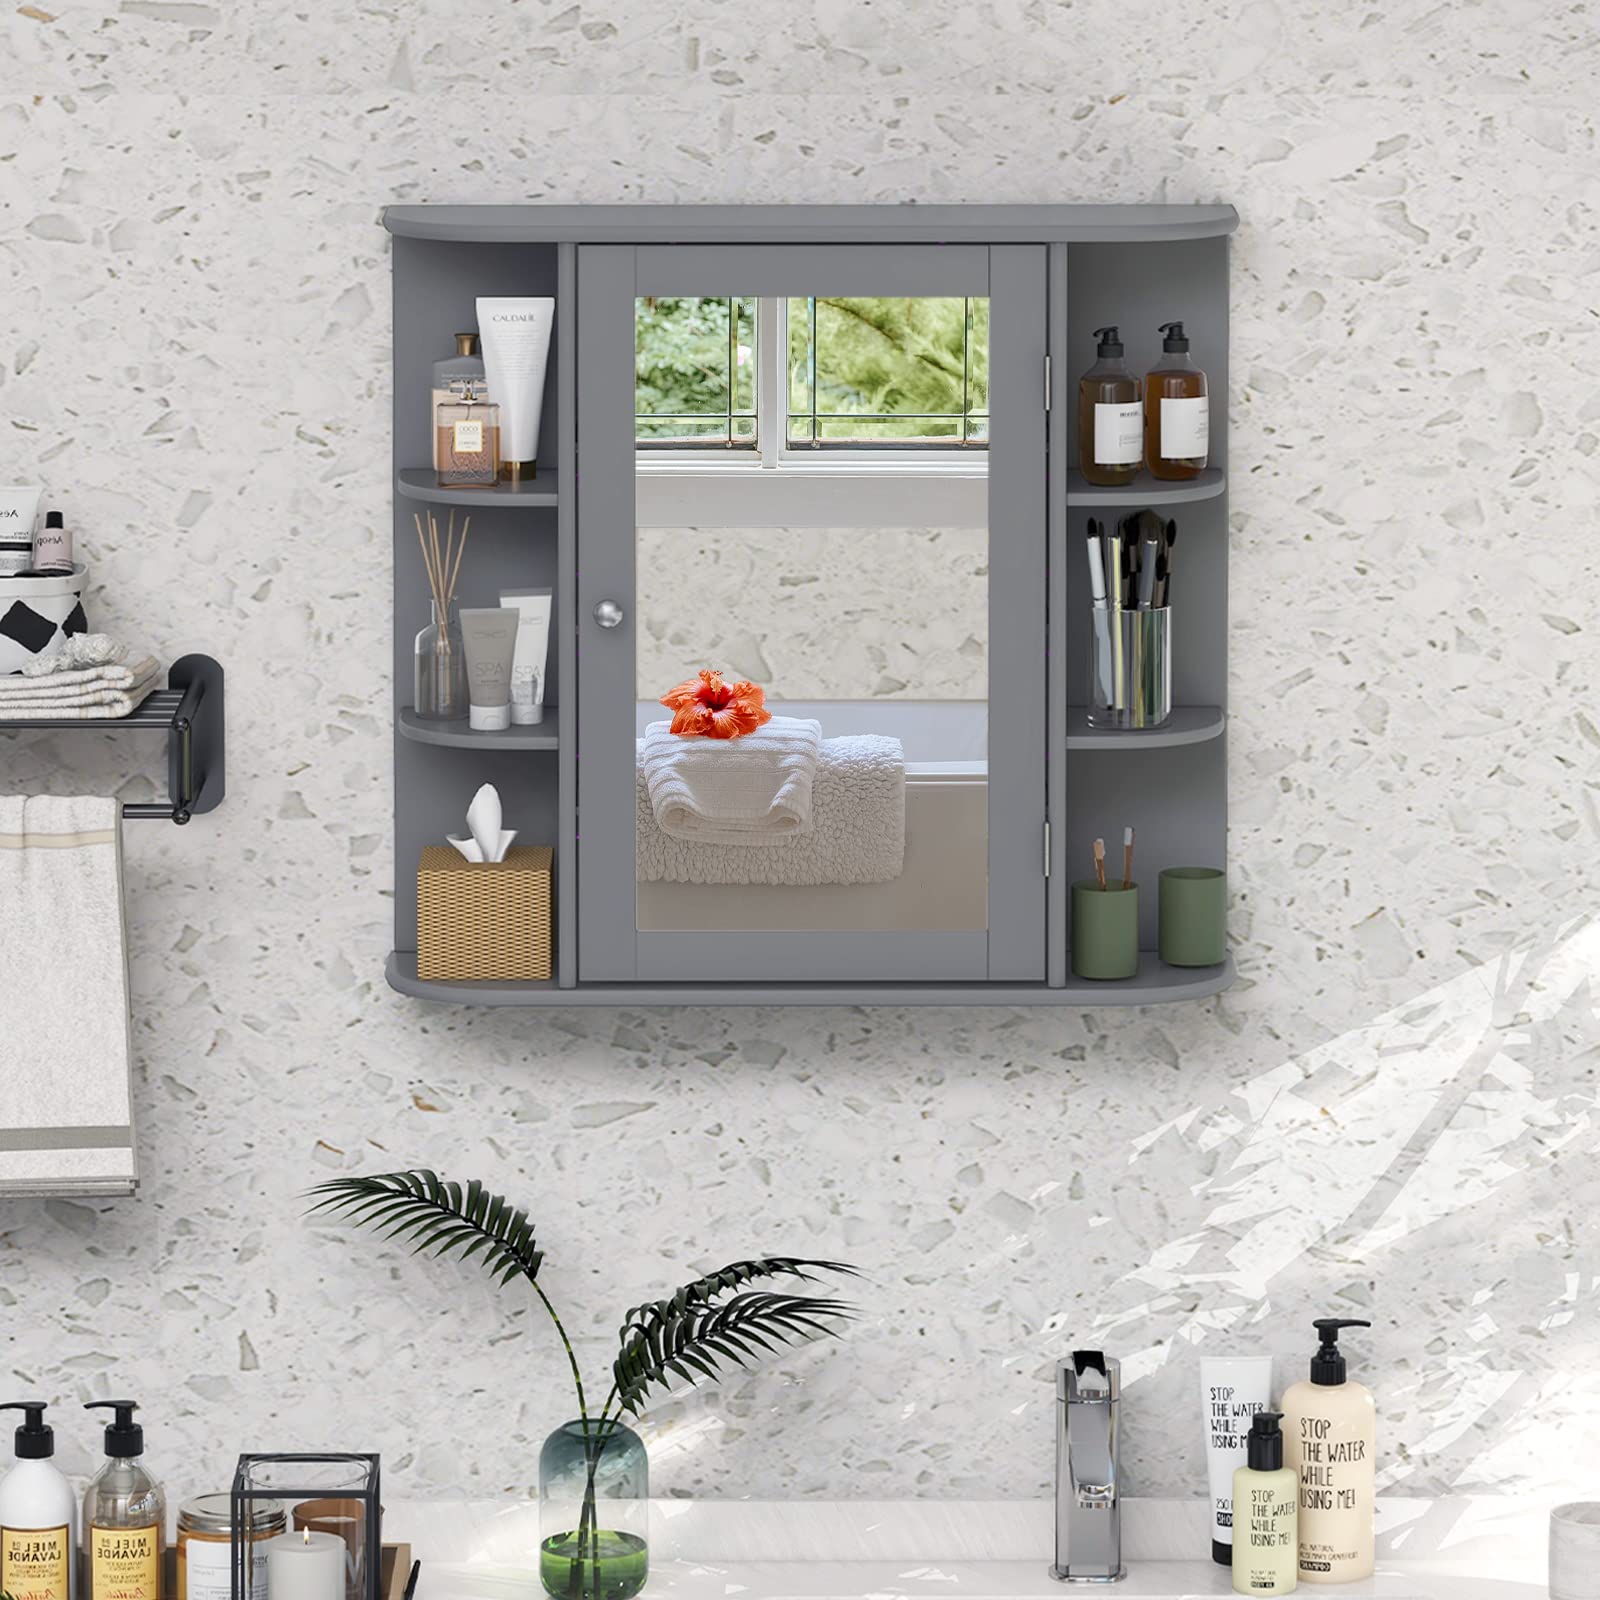 Giantex Mirrored Bathroom Medicine Cabinet - Wall Mounted Bathroom Hanging Cabinet with Single Door